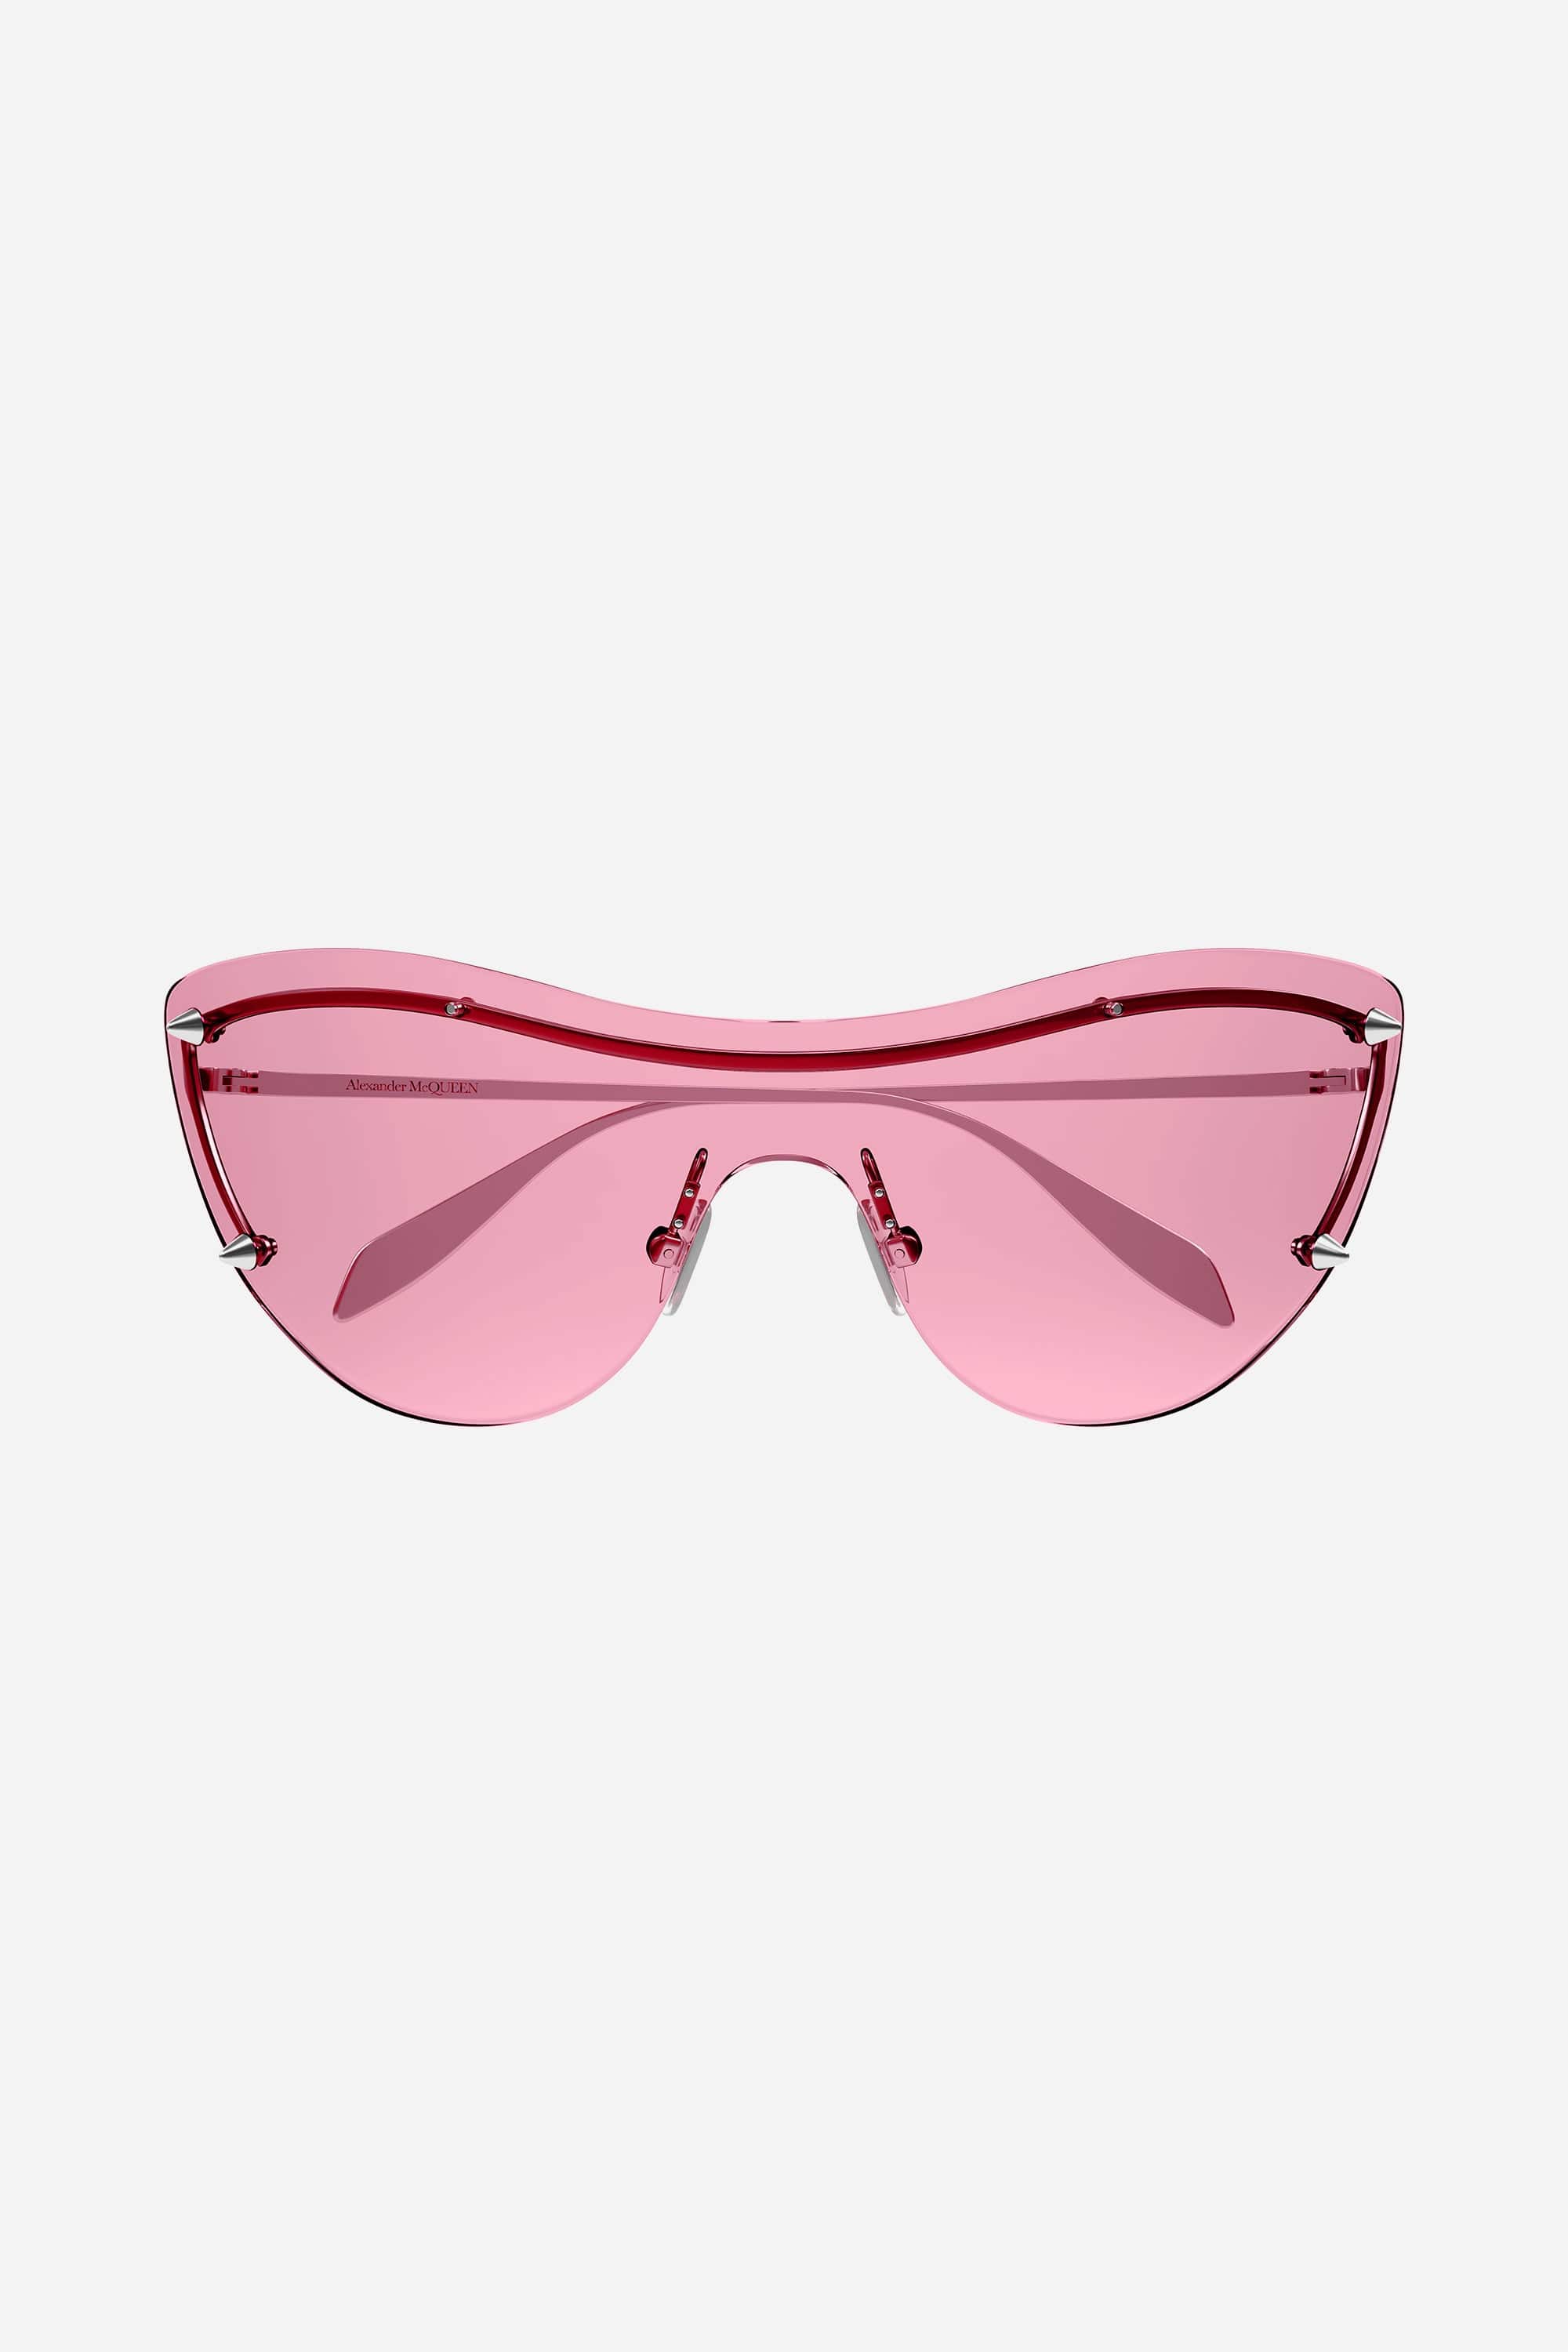 Alexander McQueen Spike Studs Cat-eye Mask Sunglasses in Pink - Eyewear Club